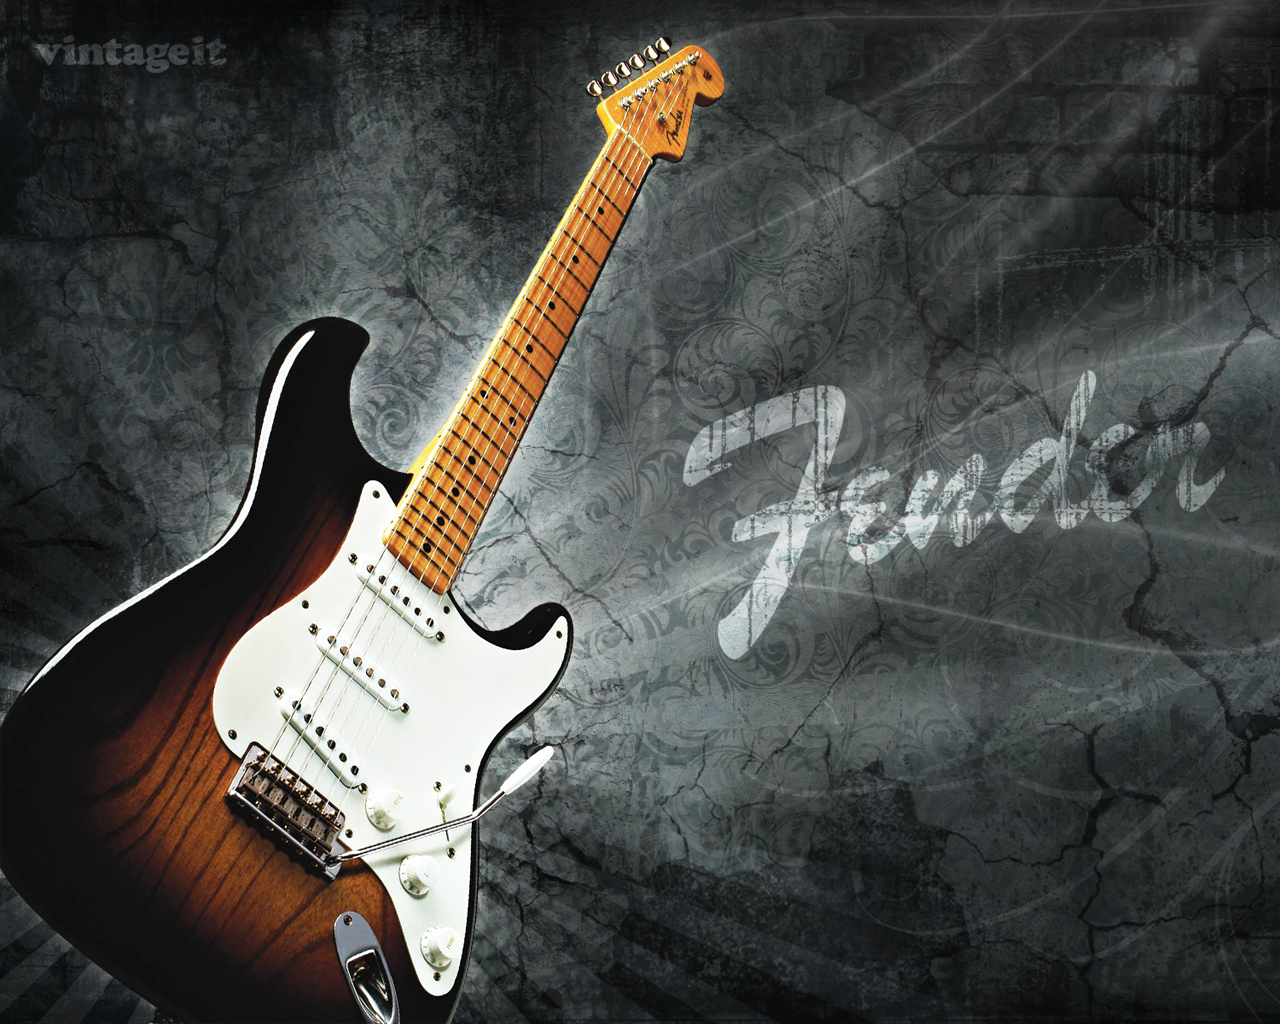 Fender Stratocaster Wallpaper Desktop HD iPad